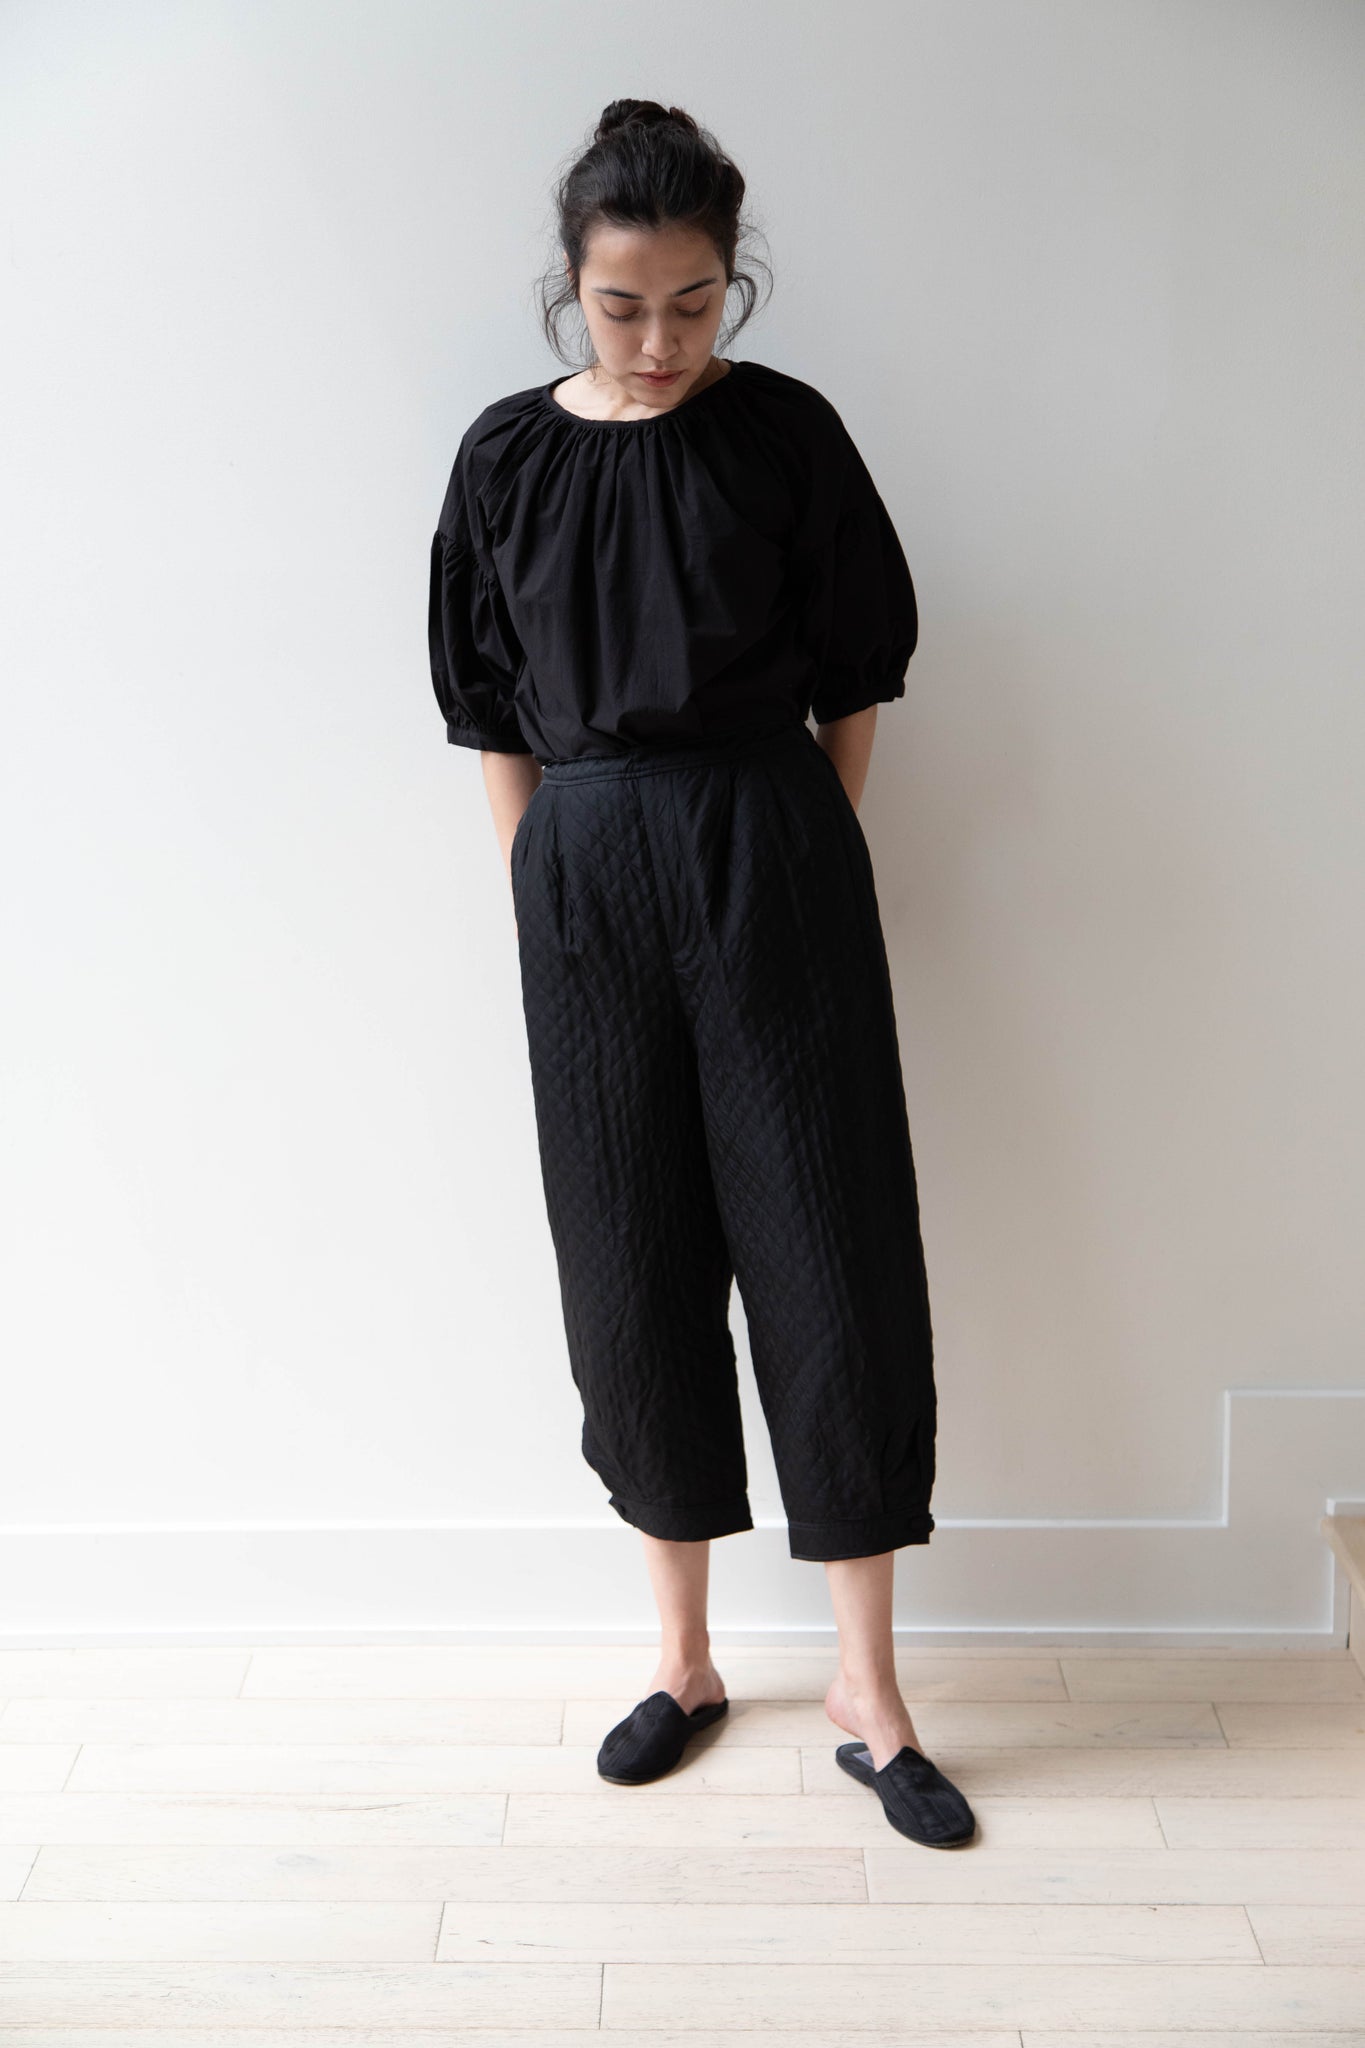 Robe de Peau | Quilted Pants in Black